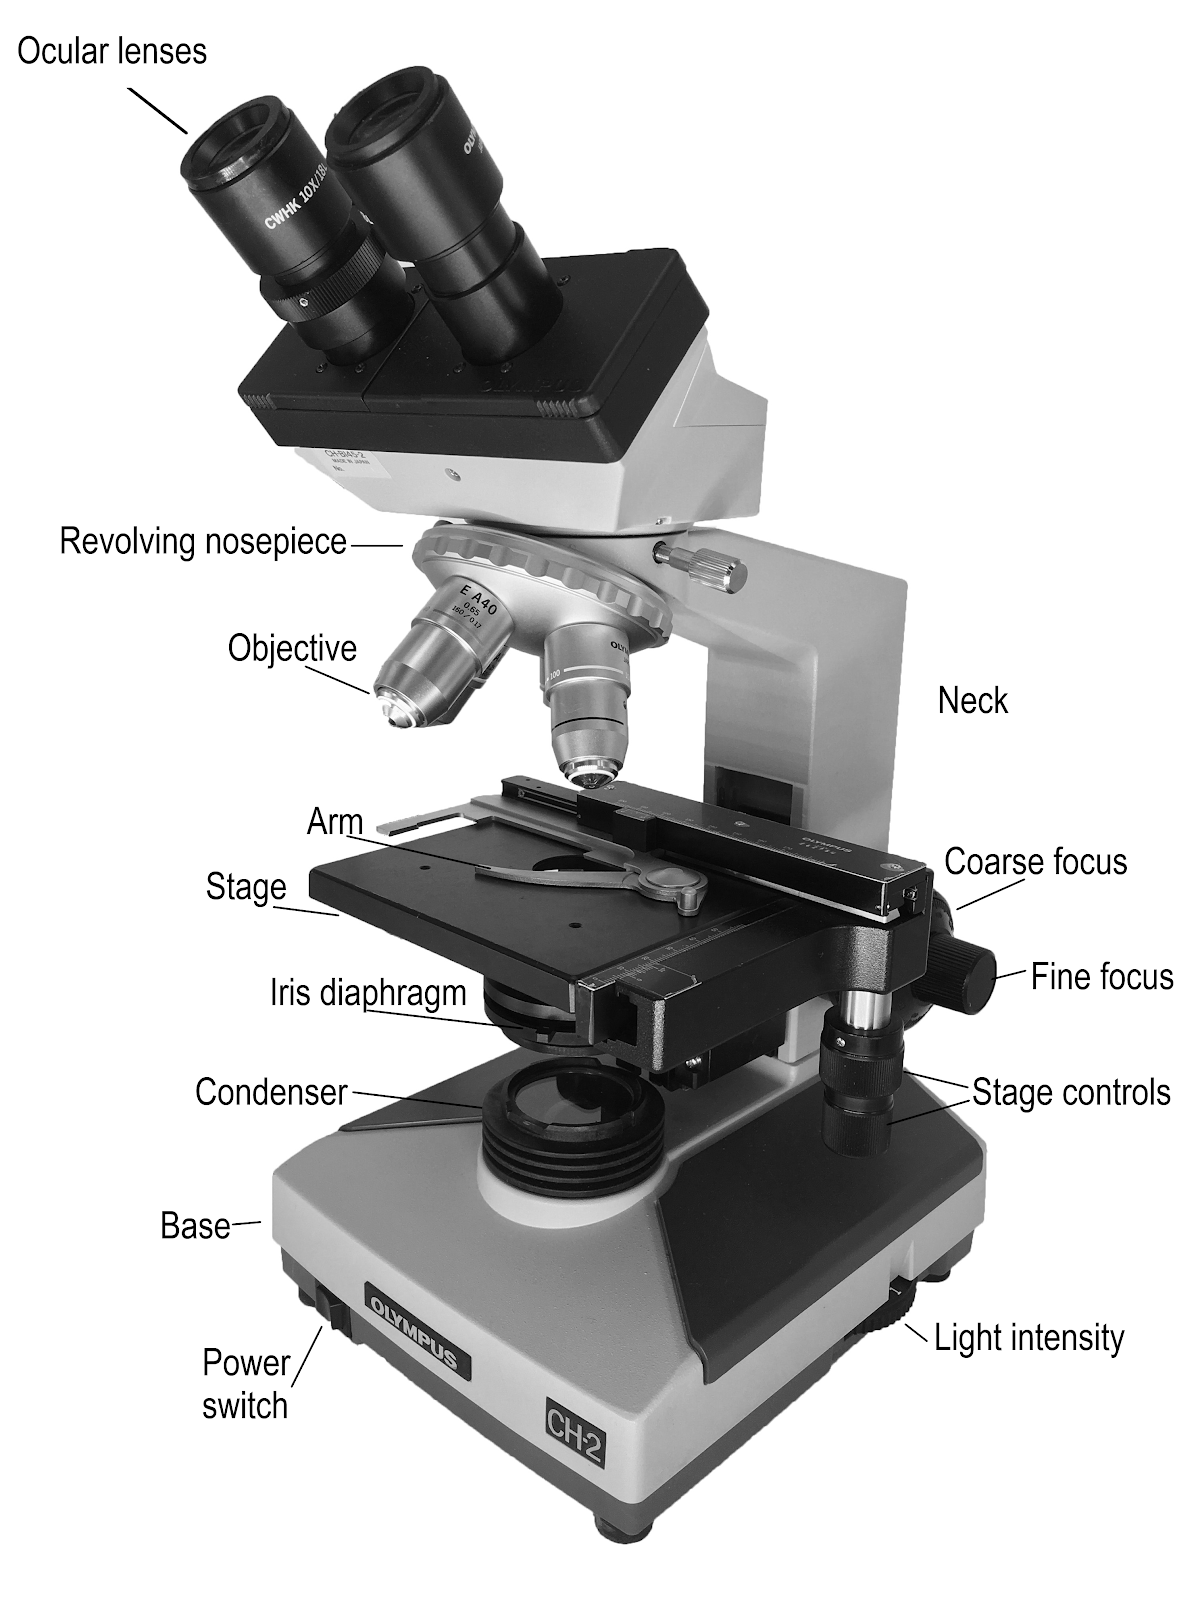 A compound microscope